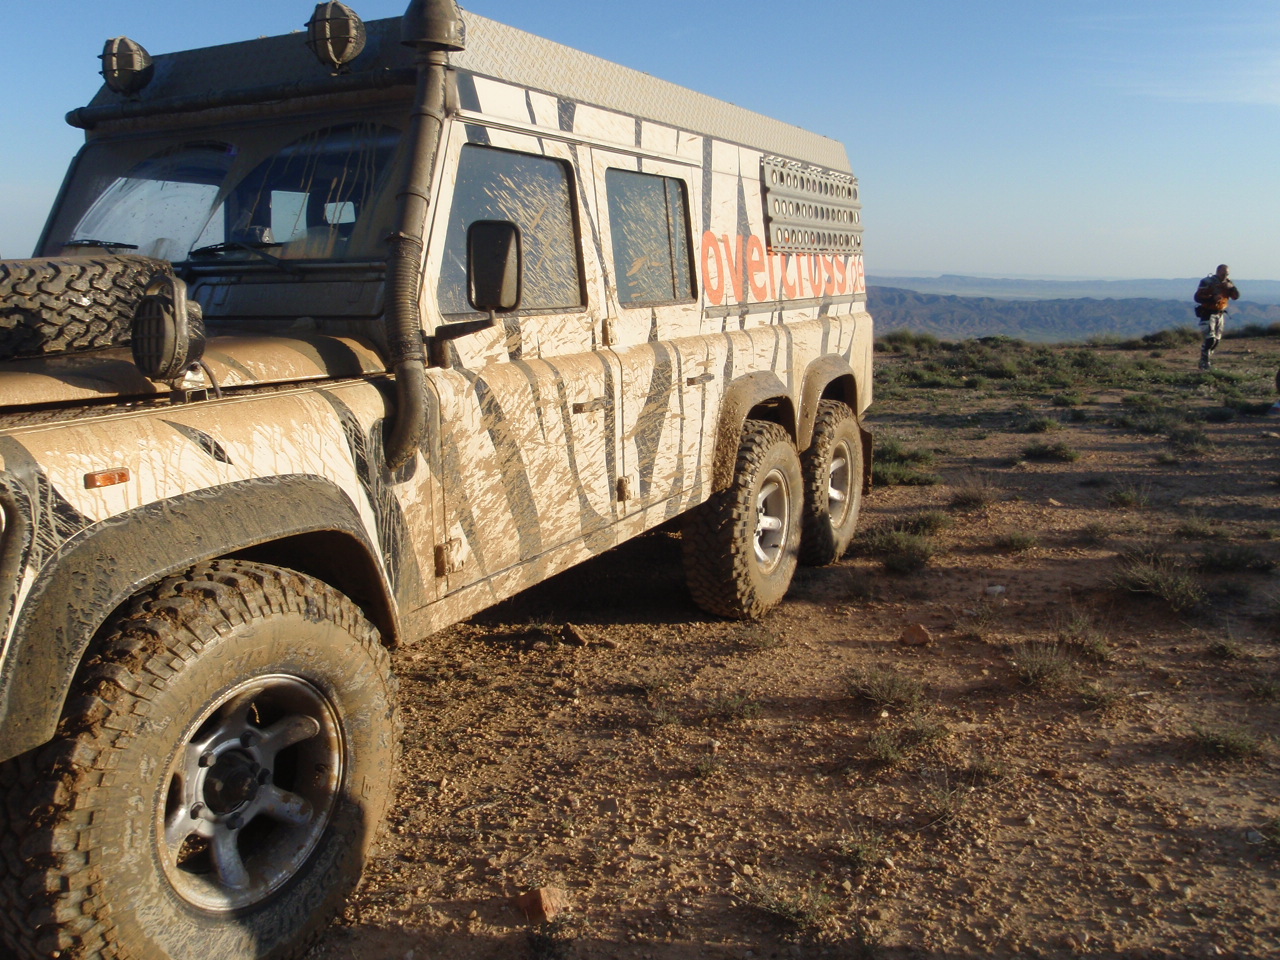 Land Rover zebra in Afrika auf Expeditions Reise